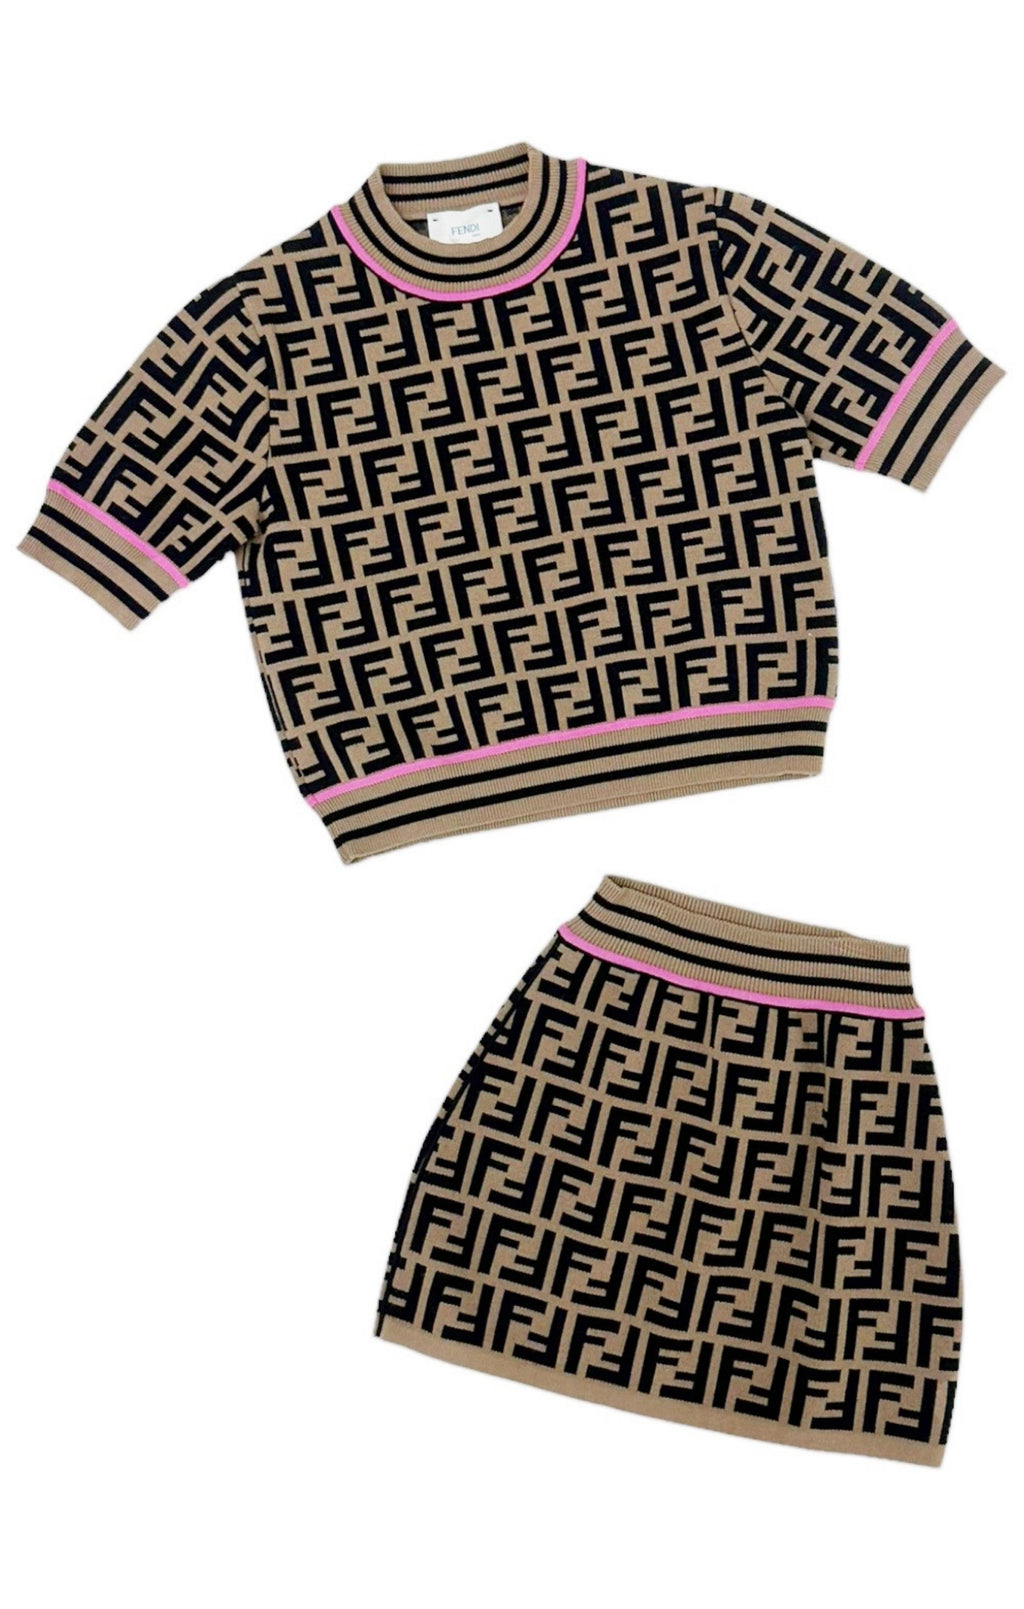 FENDI KIDS Set Size: Top - 4 Years Skirt - No size tags, fits like 3-4 Years